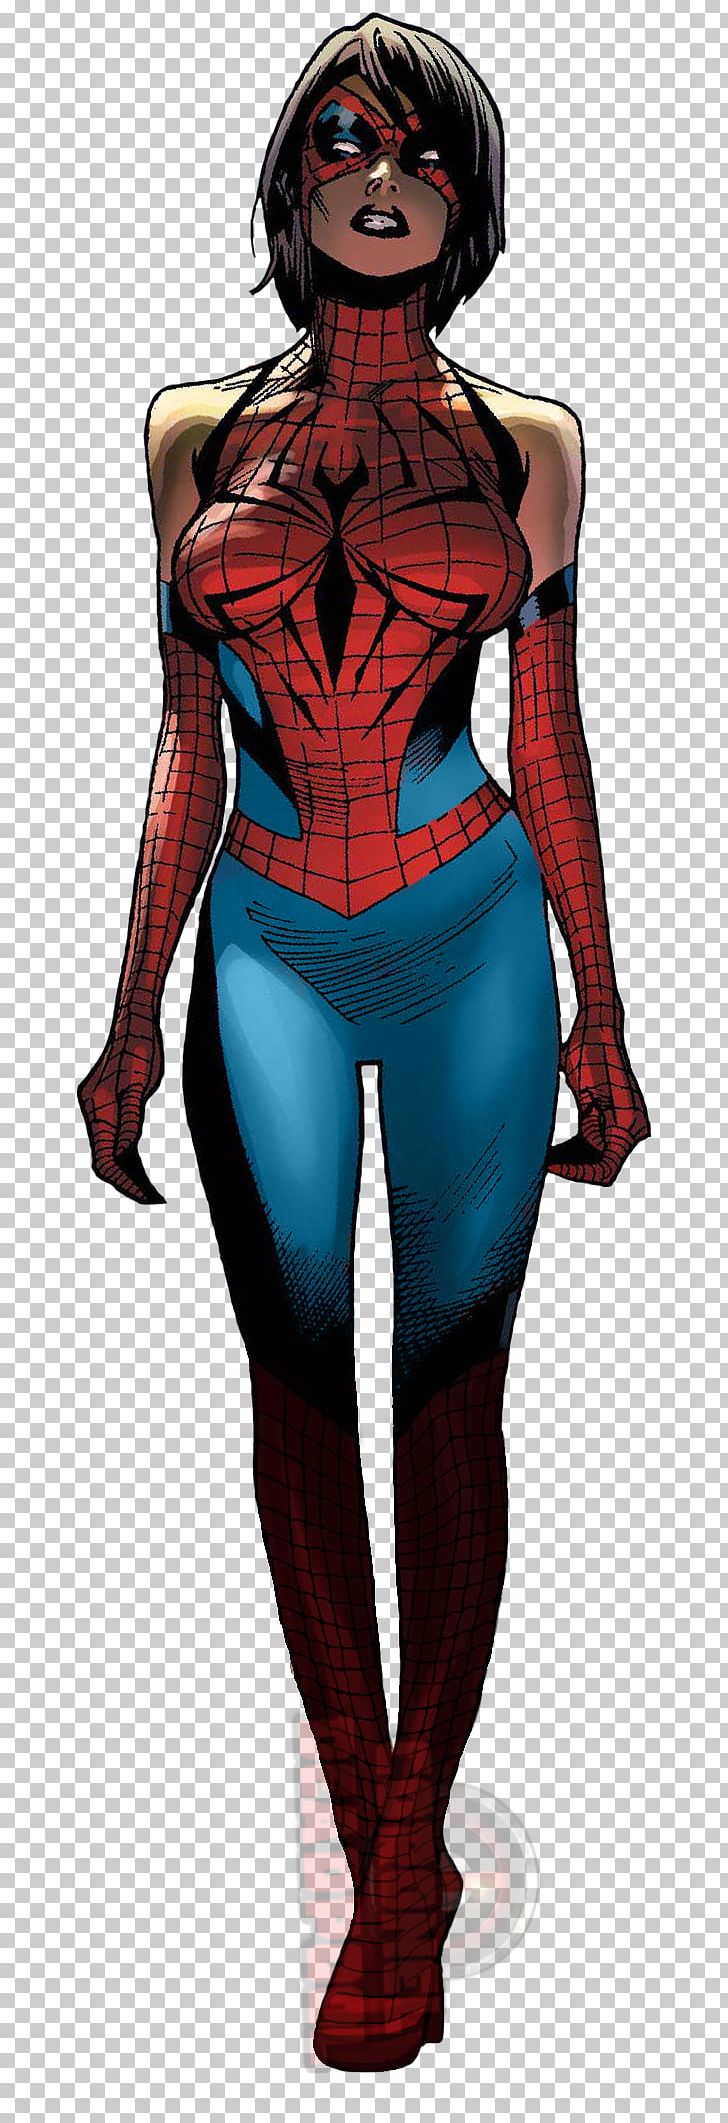 Spider-Man Deadpool Venom Spider-Woman (Jessica Drew) PNG, Clipart, Carnage, Comics, Costume, Costume Design, Deviantart Free PNG Download